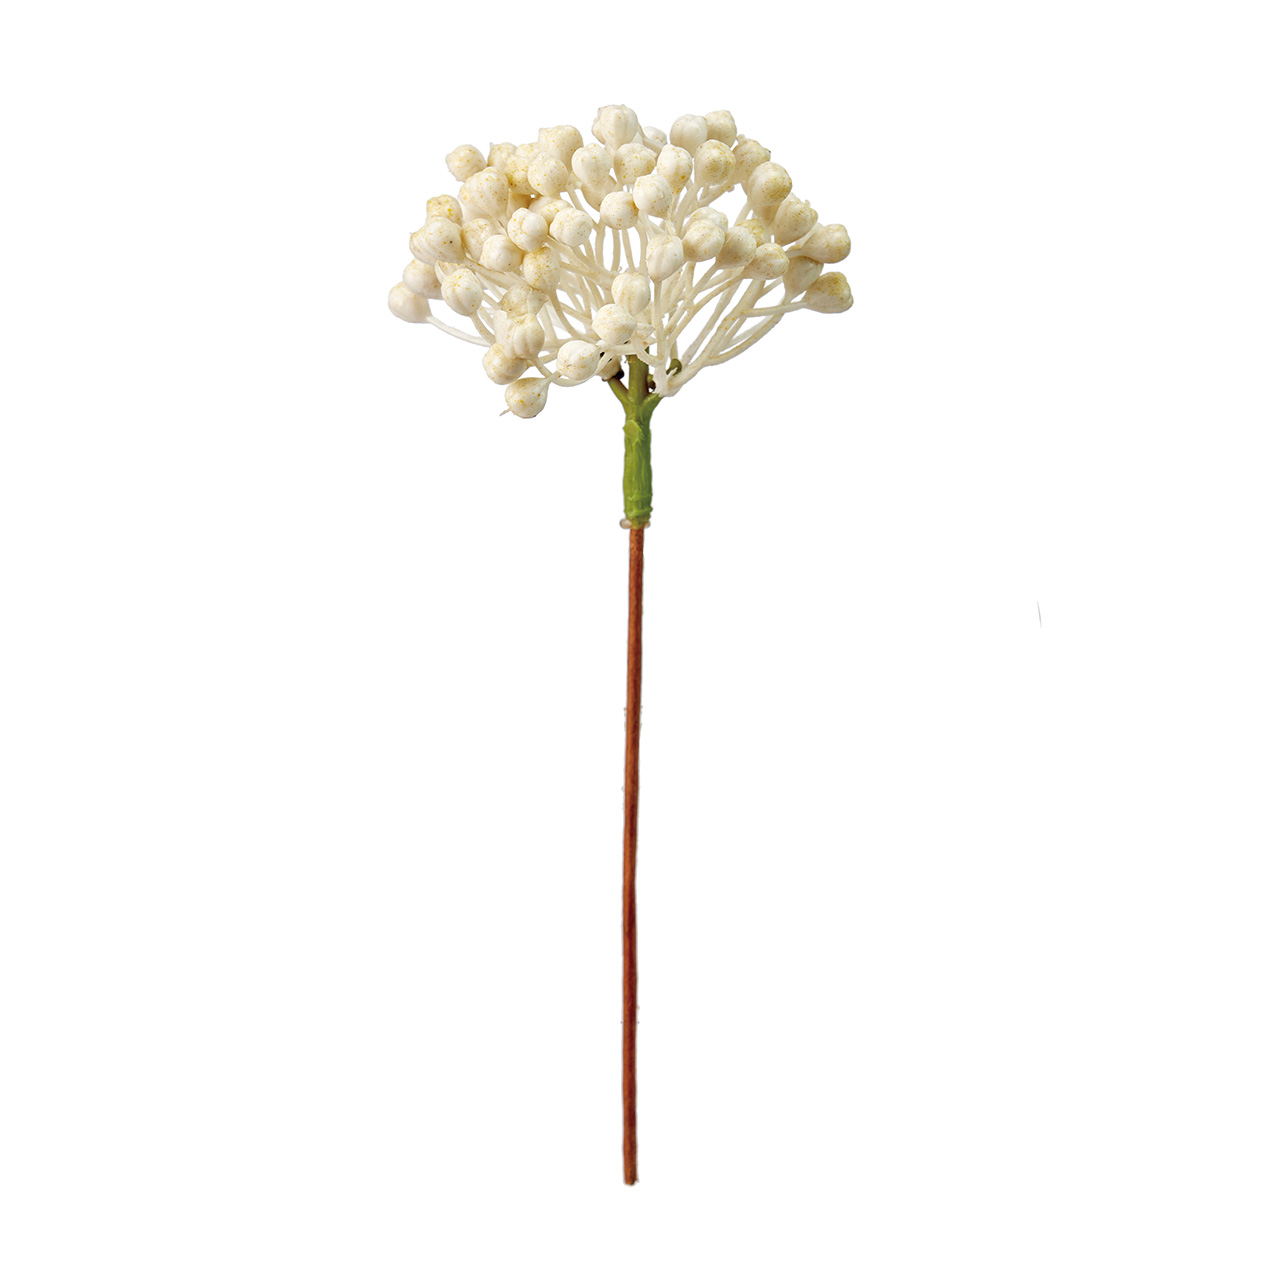 MAGIQ　グレインベリー　クリーム　アーティフィシャルフラワー　造花　実もの　ベリー　FM004812-037